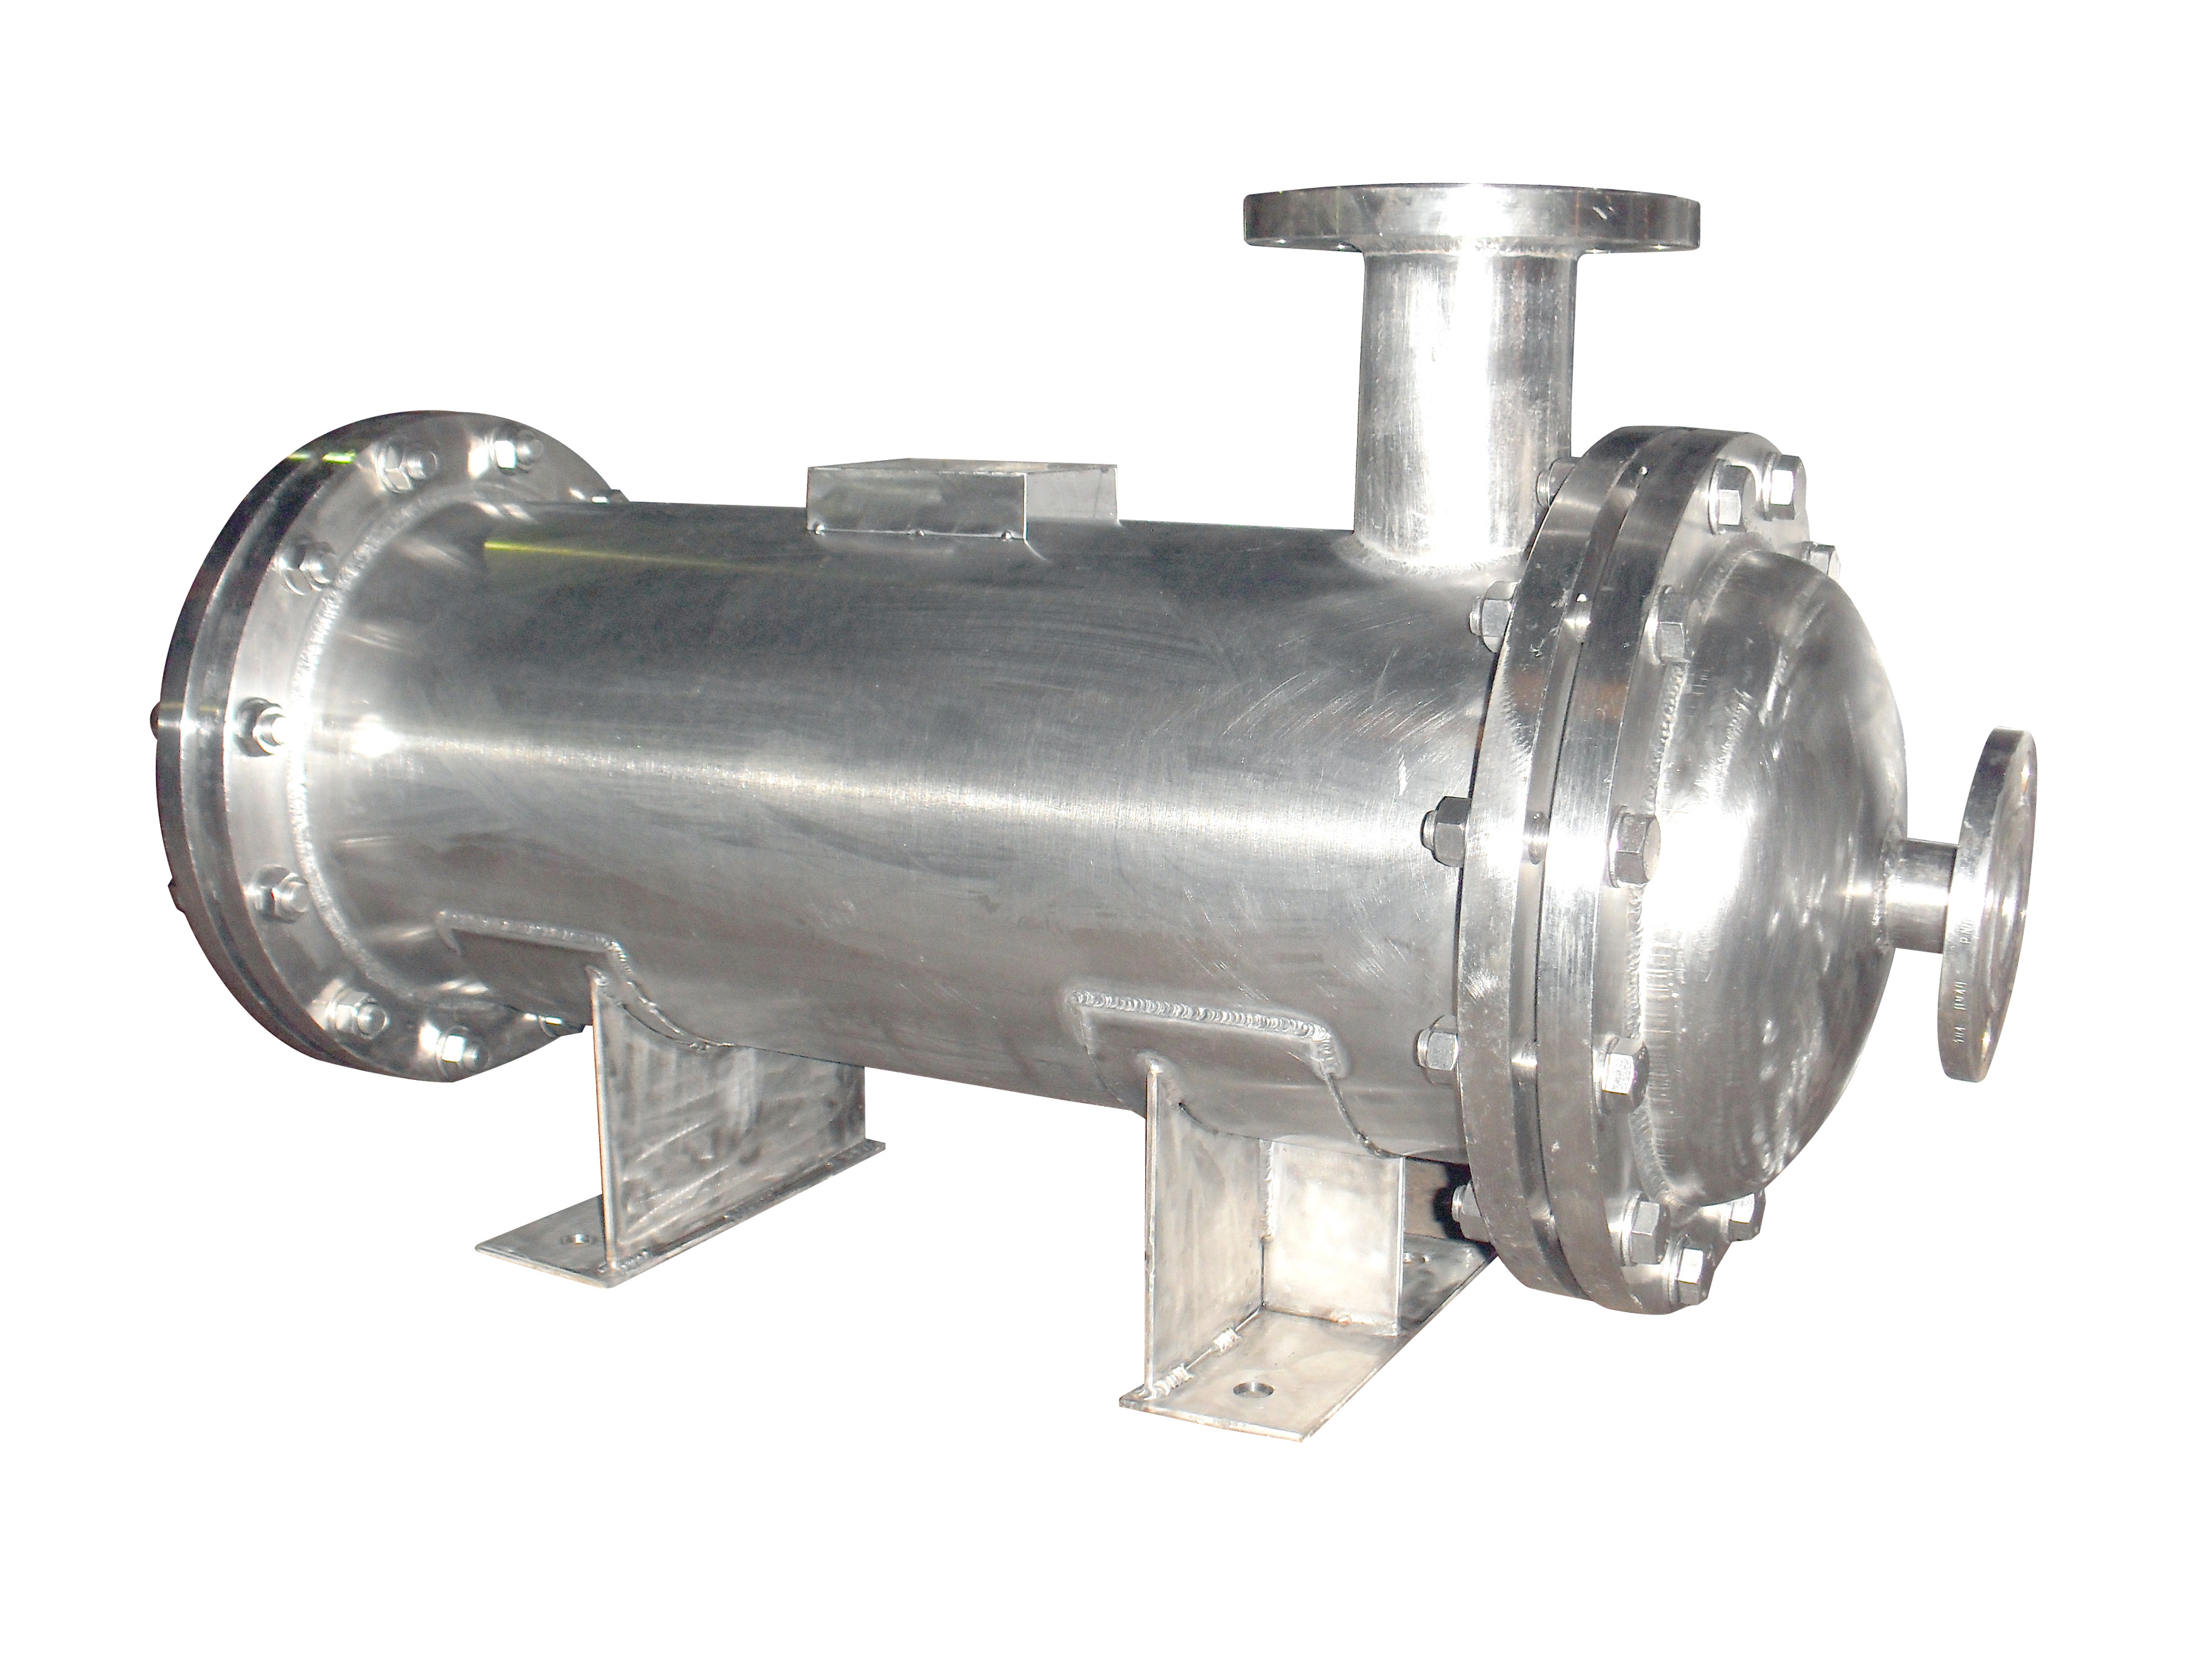 Jiema Shell&tube heat exchanger production